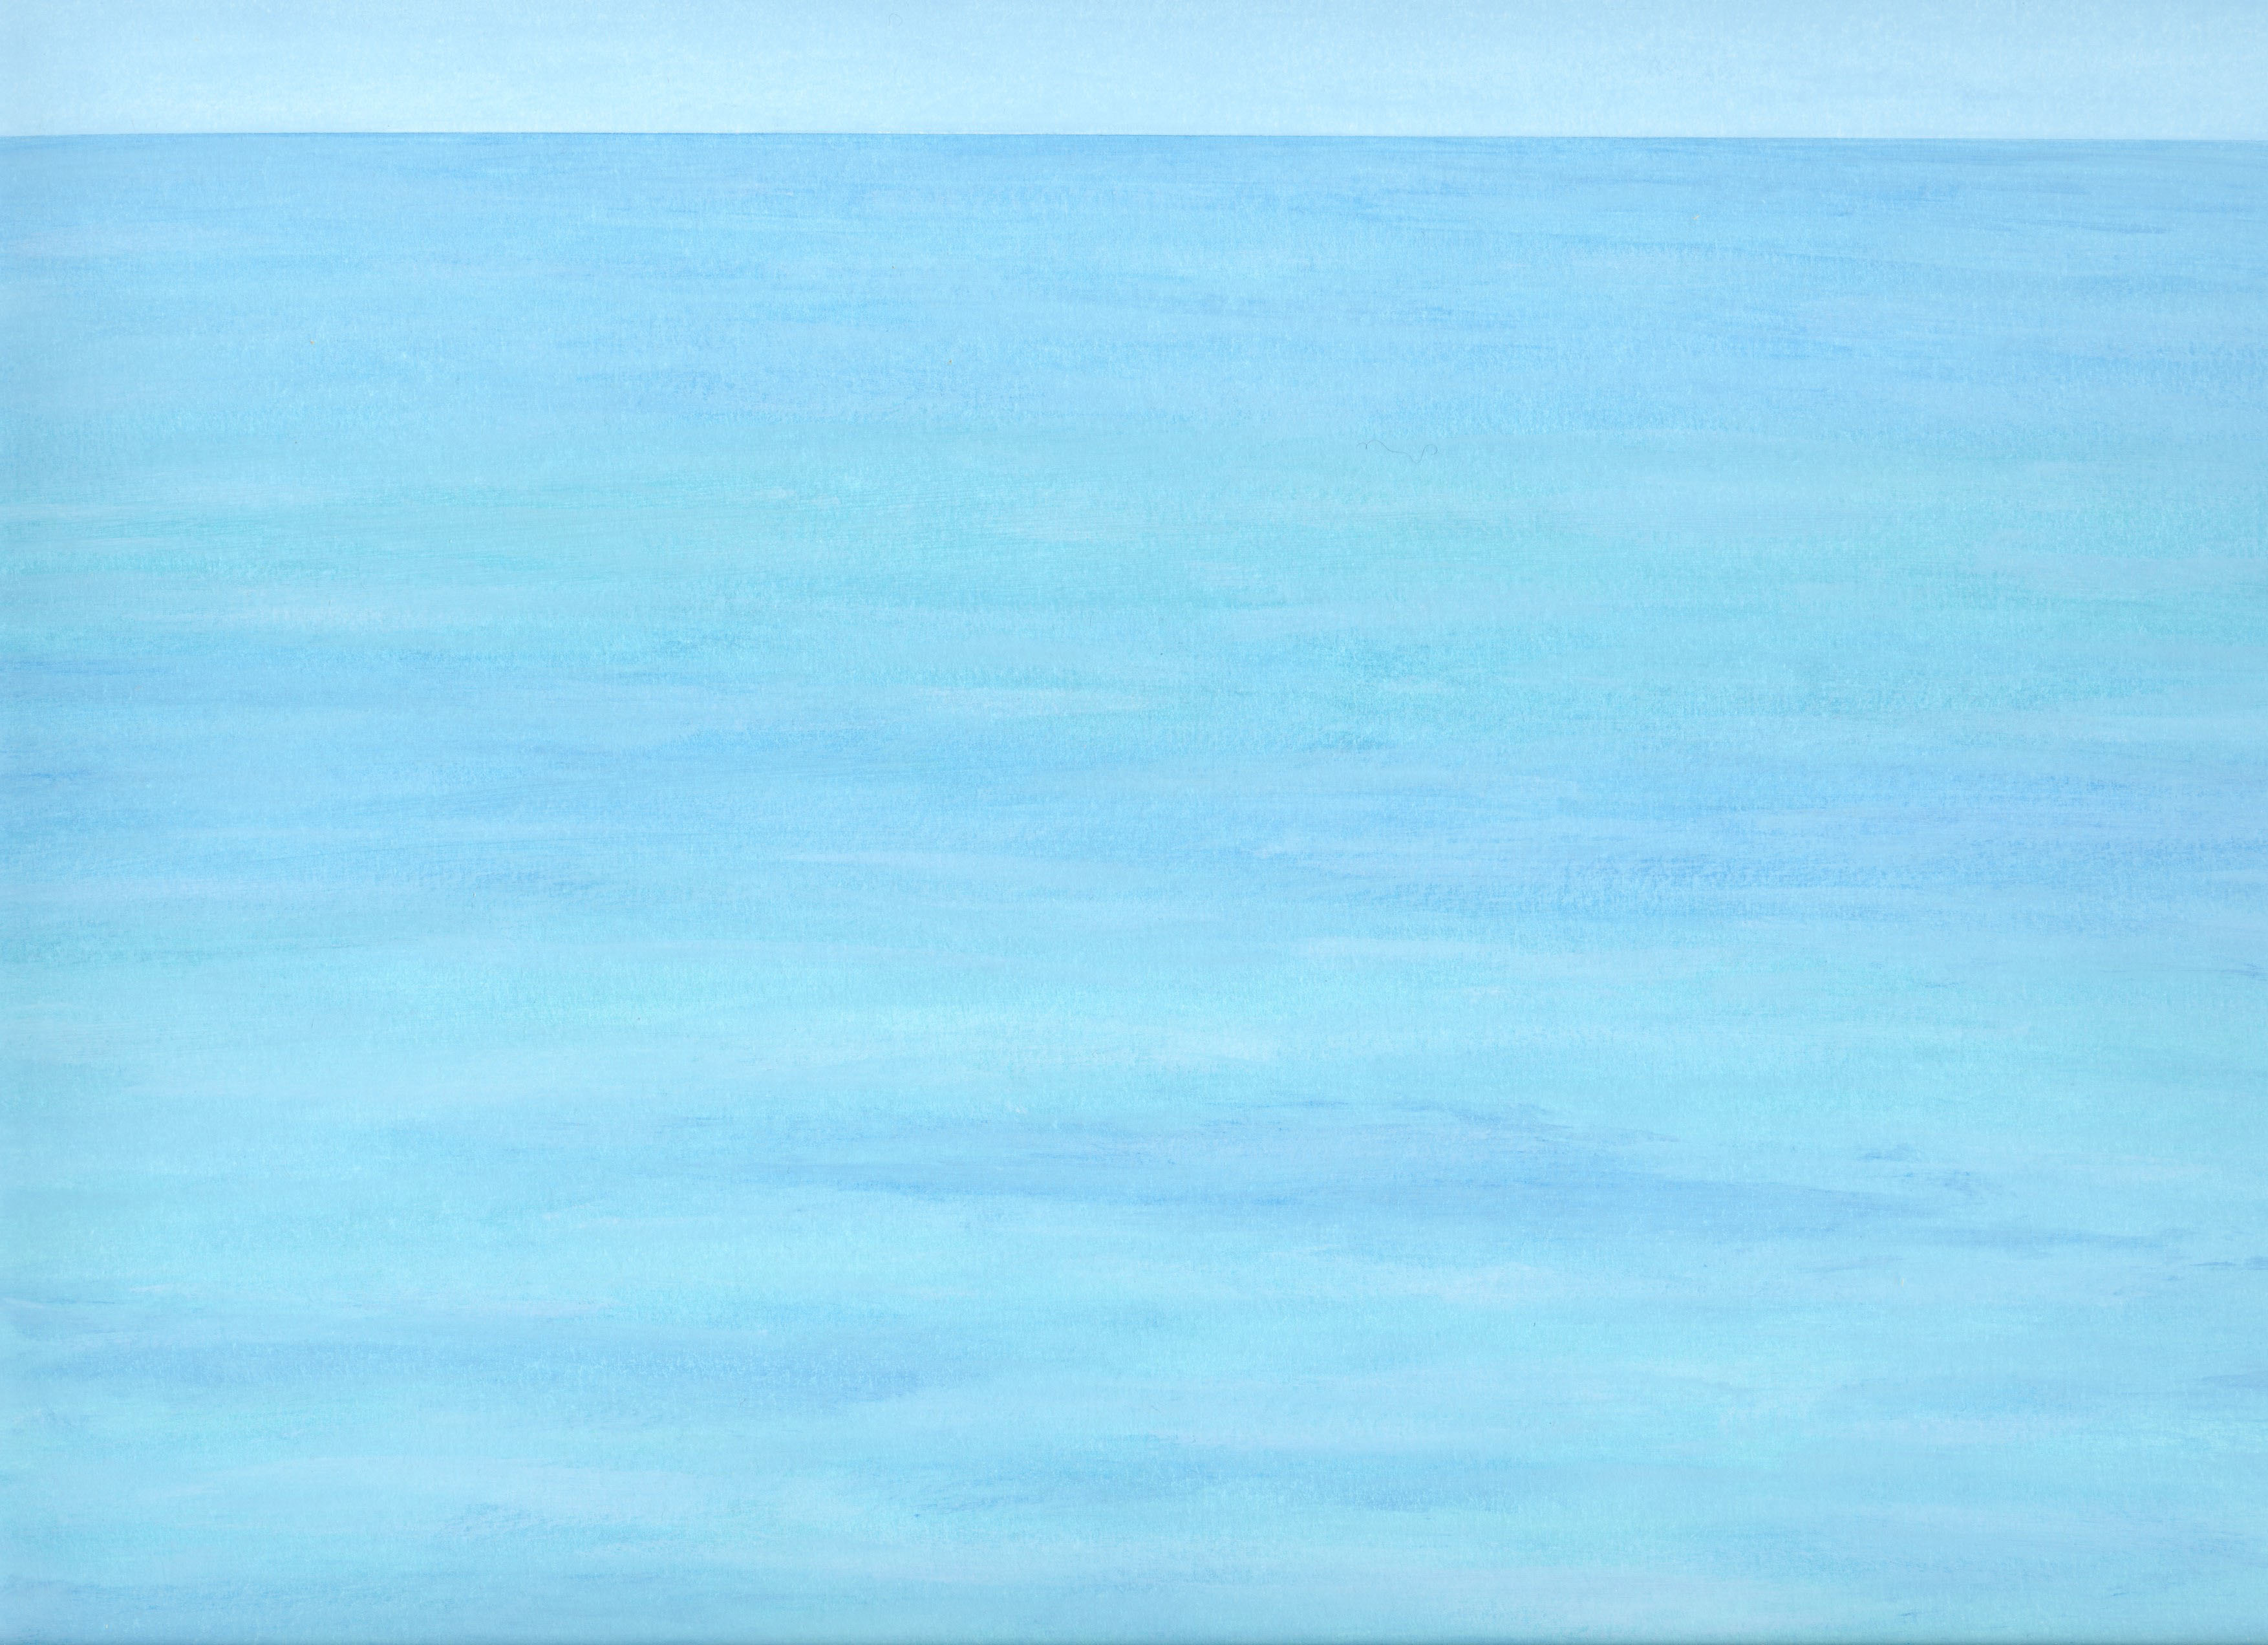 Seestück / Seascape 124, 2014, 36 x 43 cm, Mischtechnik auf Papier / Mixed media on paper